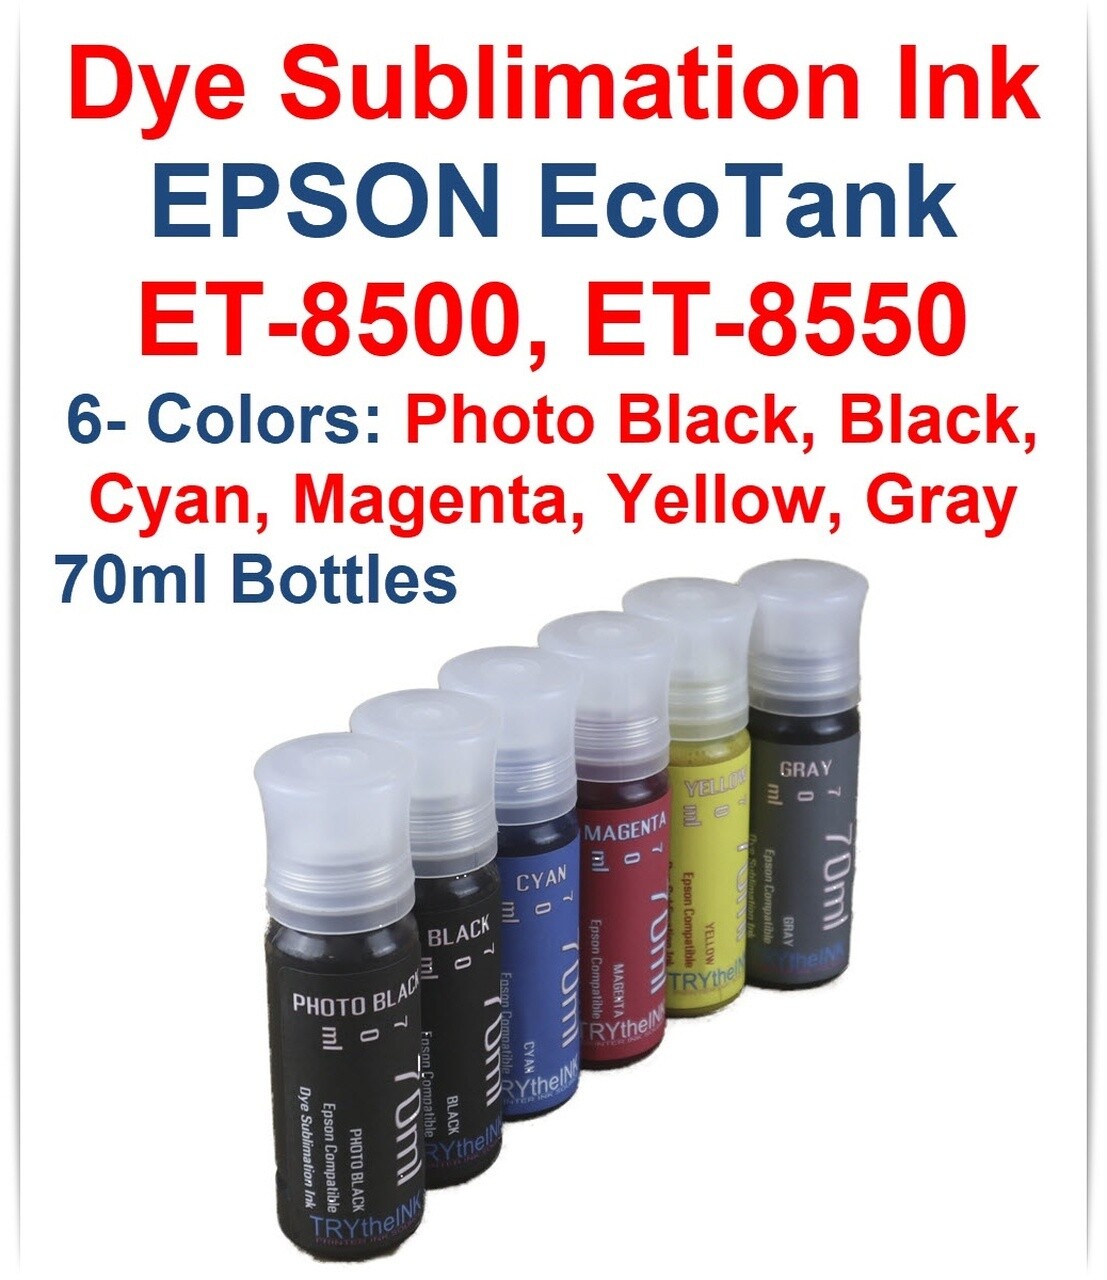 Dye Sublimation Ink 6- 70ml bottles for EPSON EcoTank ET-8500 ET-8550 printers